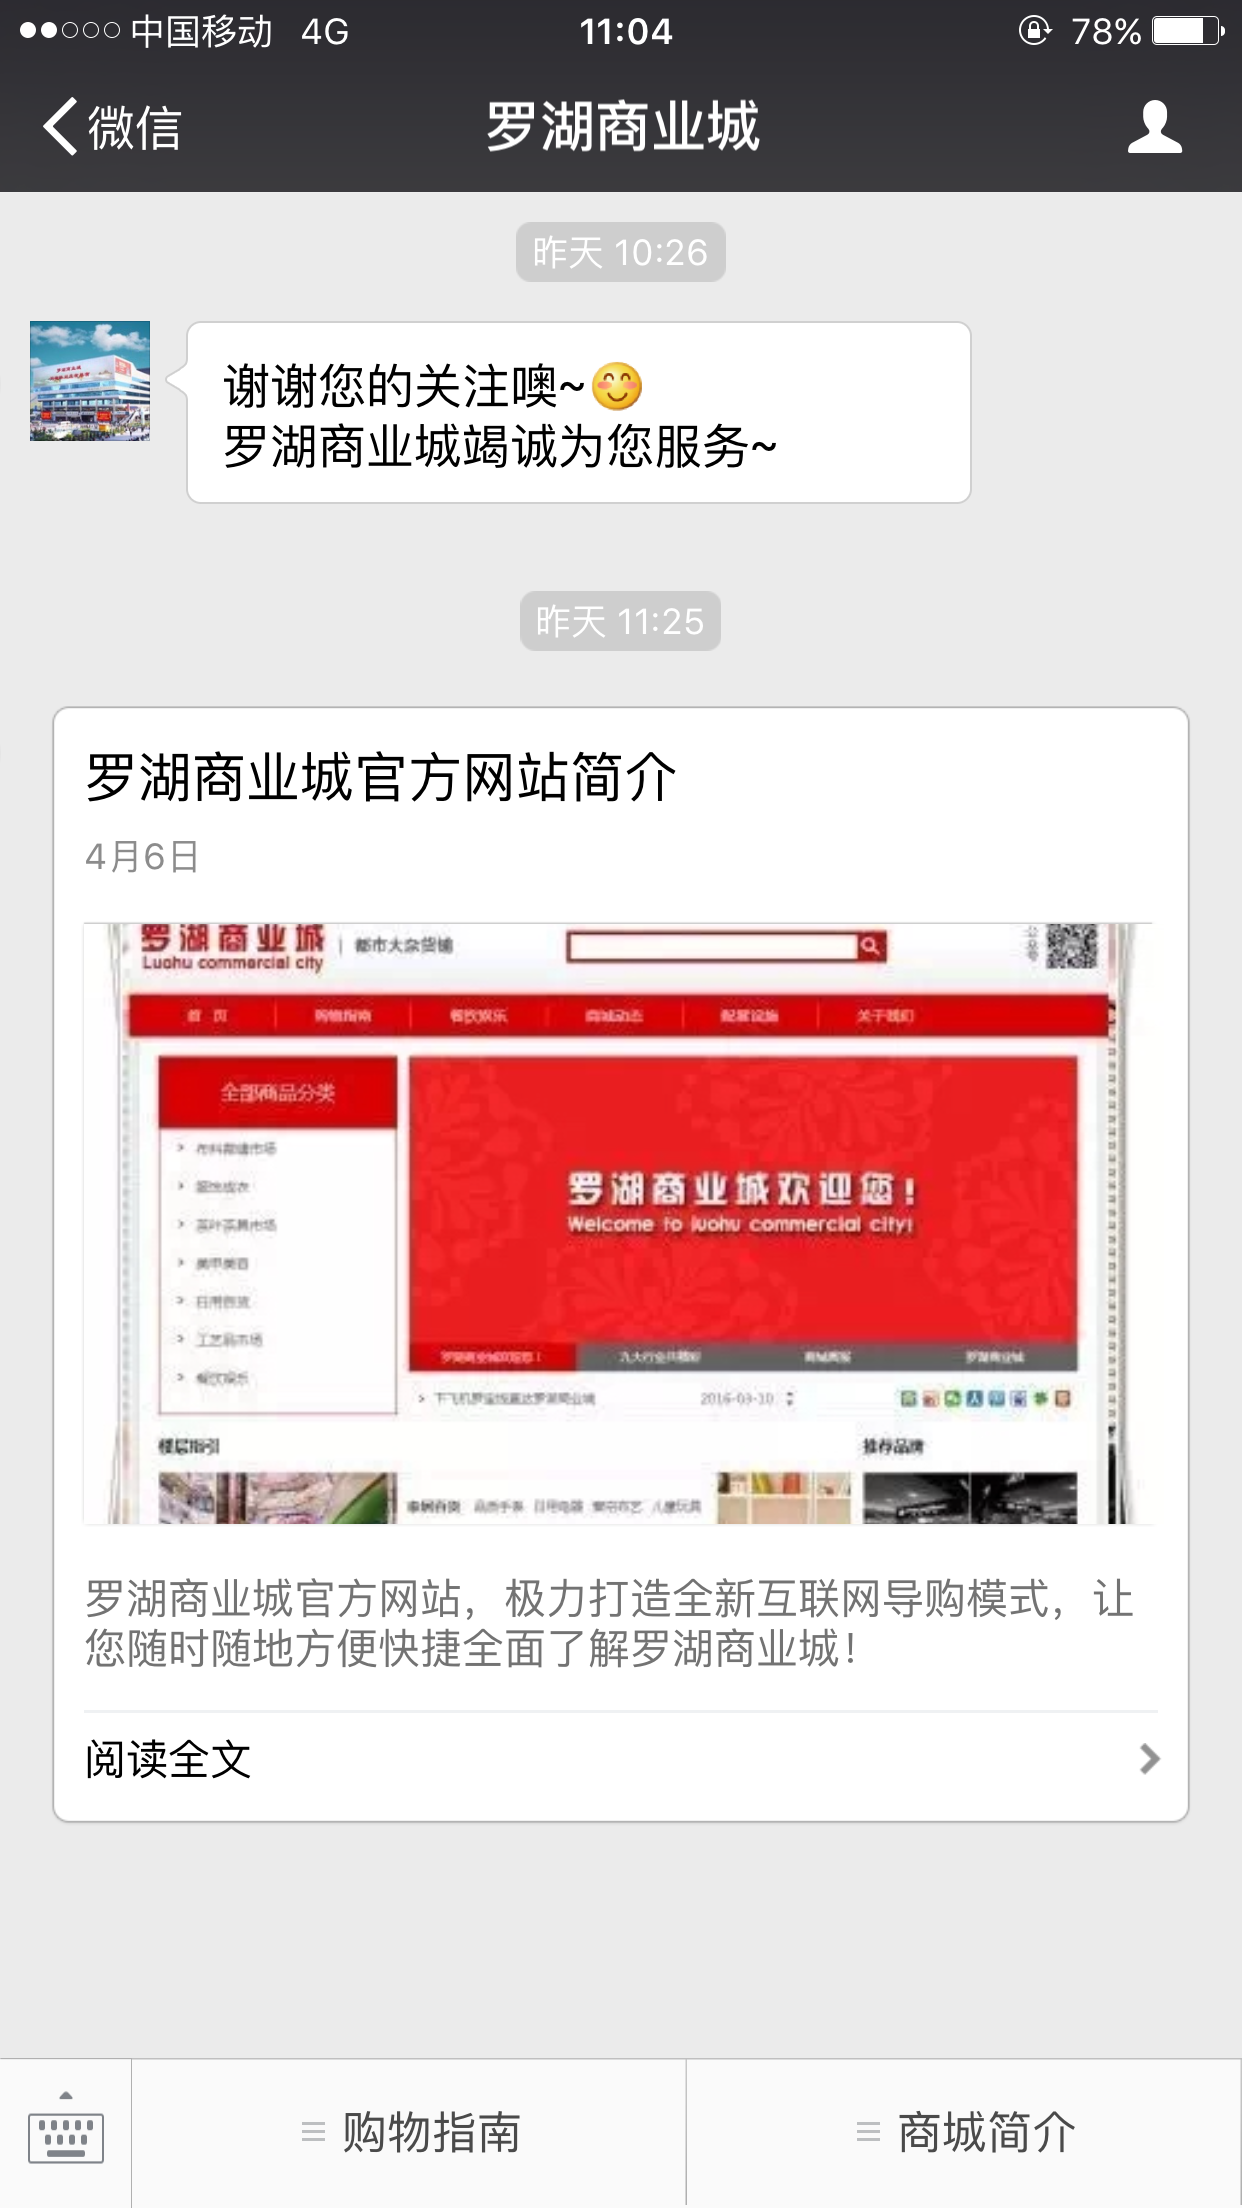 The WeChat public number is online!